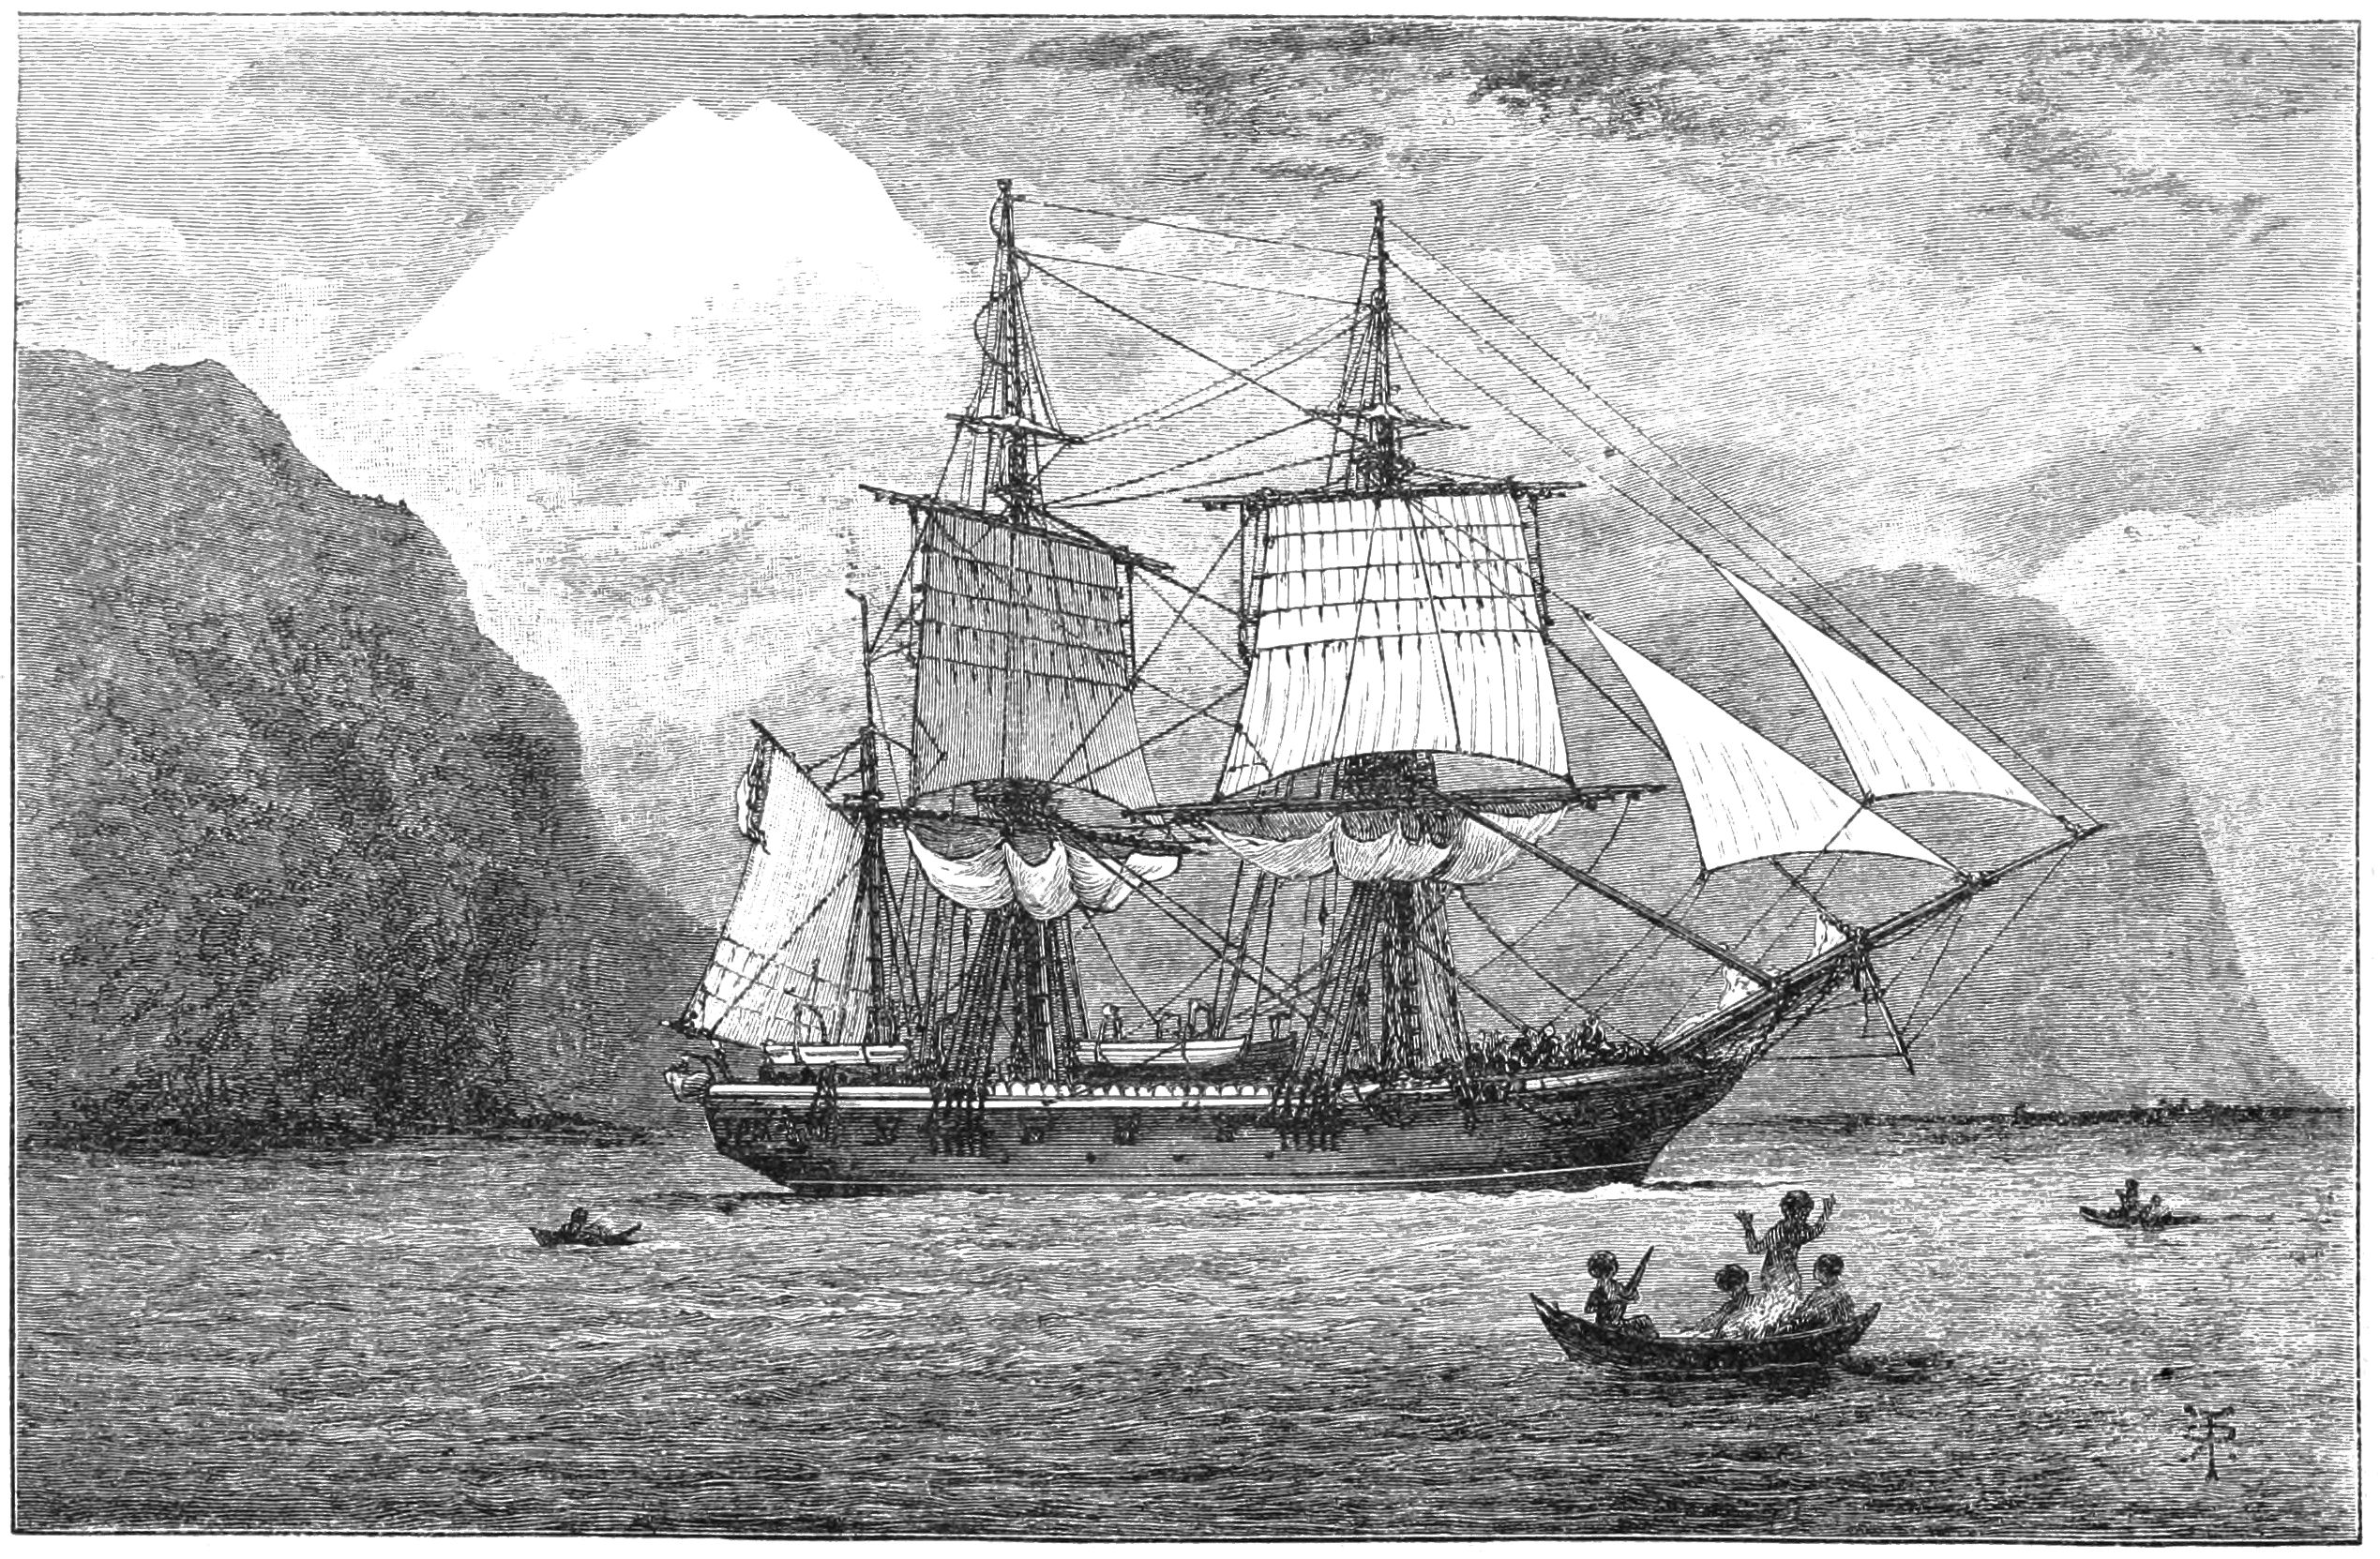 purpose of the beagle voyage